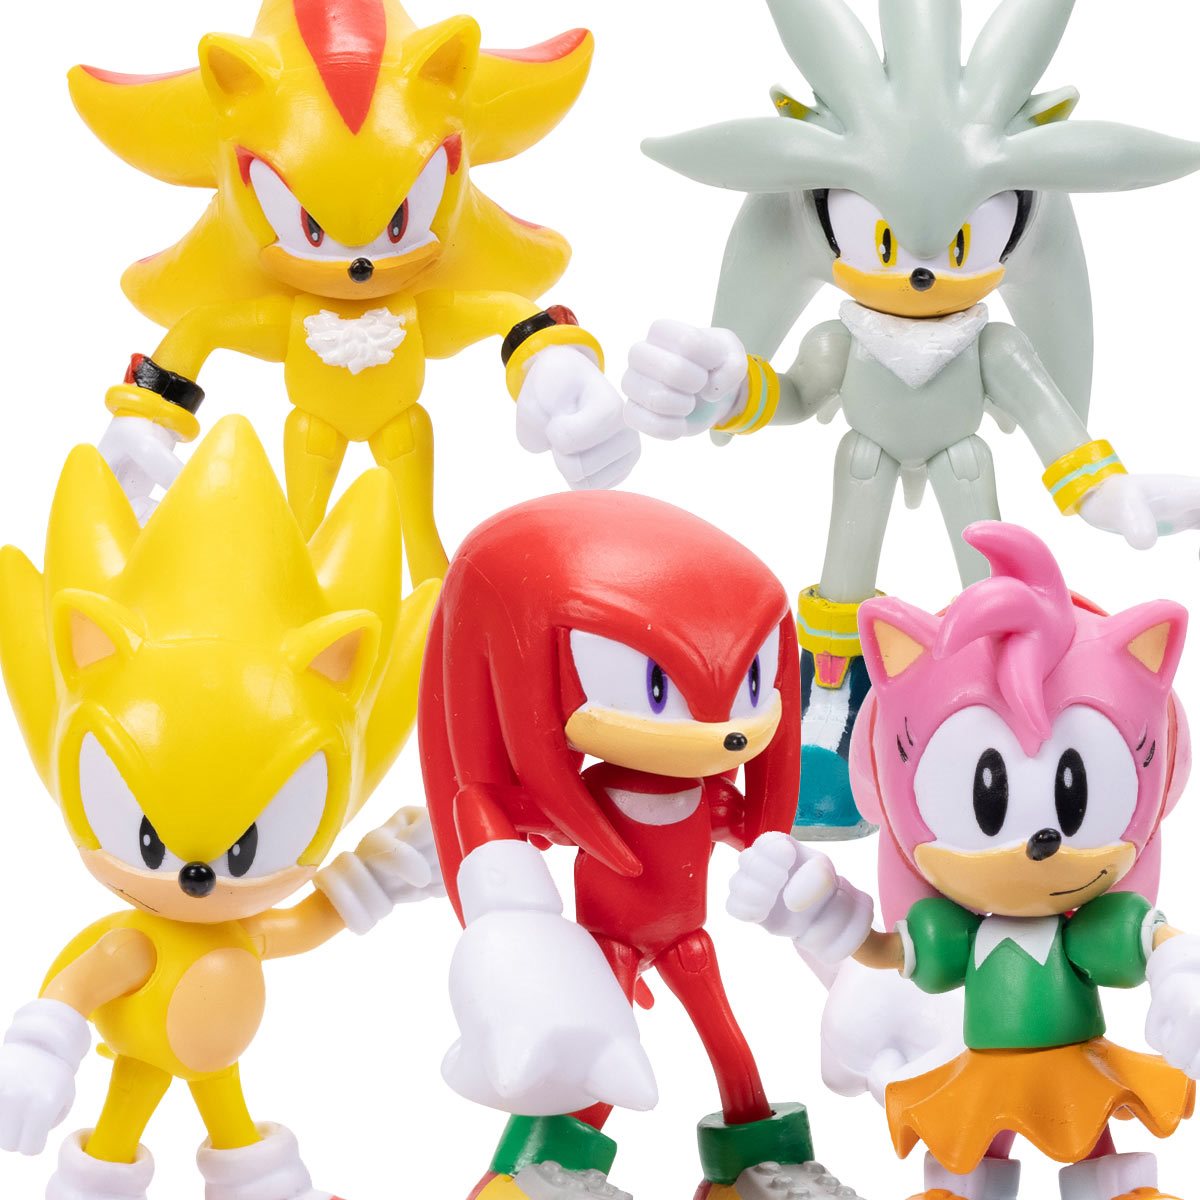 Sonic The Hedgehog Classic Collection Dr. Eggman, Kunckles, Sonic, Tails  Amy Exclusive 2.5 Action Figure 5-Pack Jakks Pacific - ToyWiz